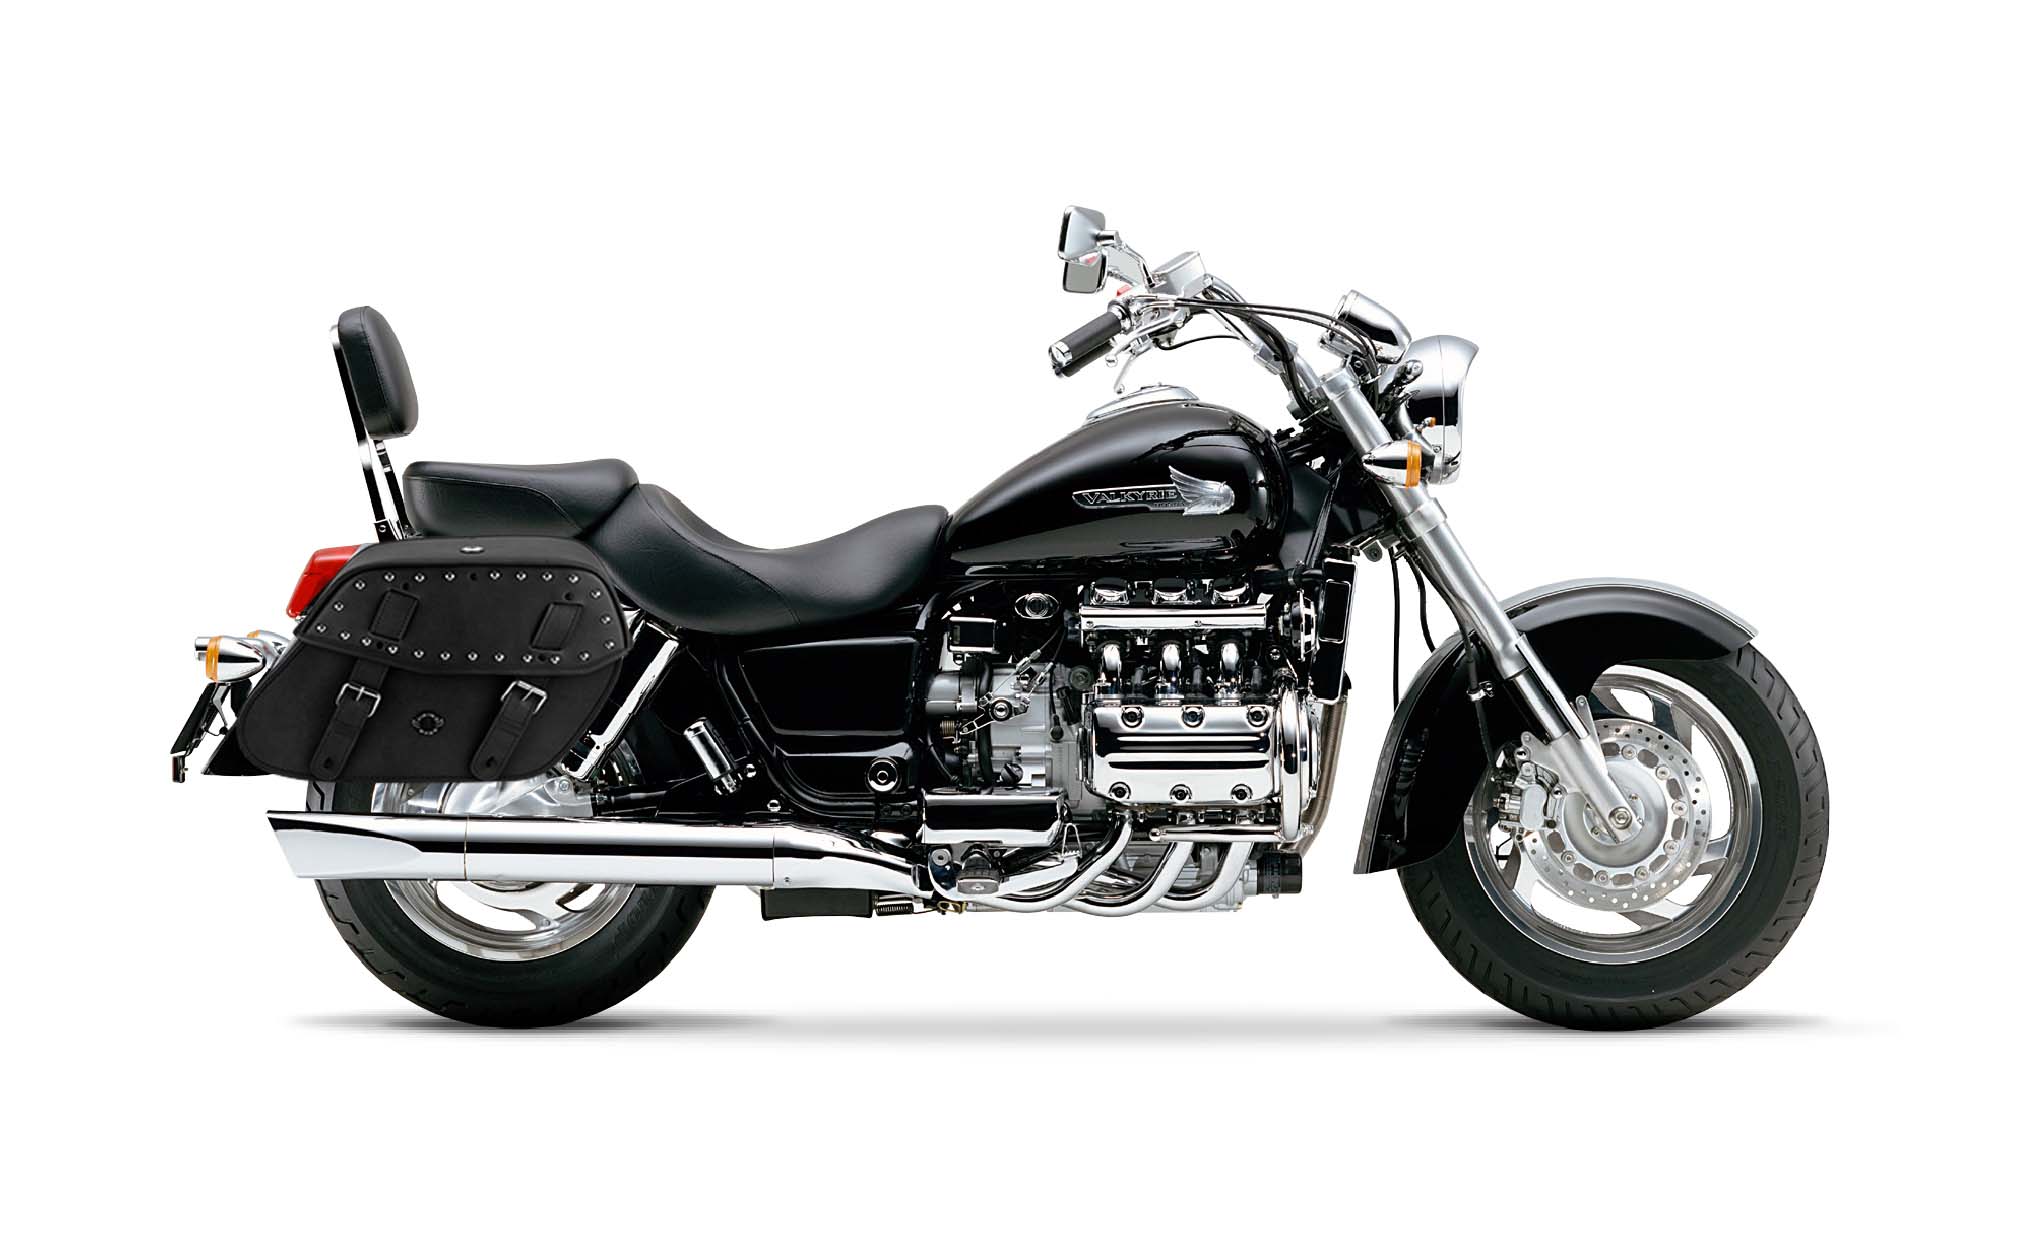 Viking Odin Large Honda Valkyrie 1500 Standard Studded Leather Motorcycle Saddlebags on Bike Photo @expand